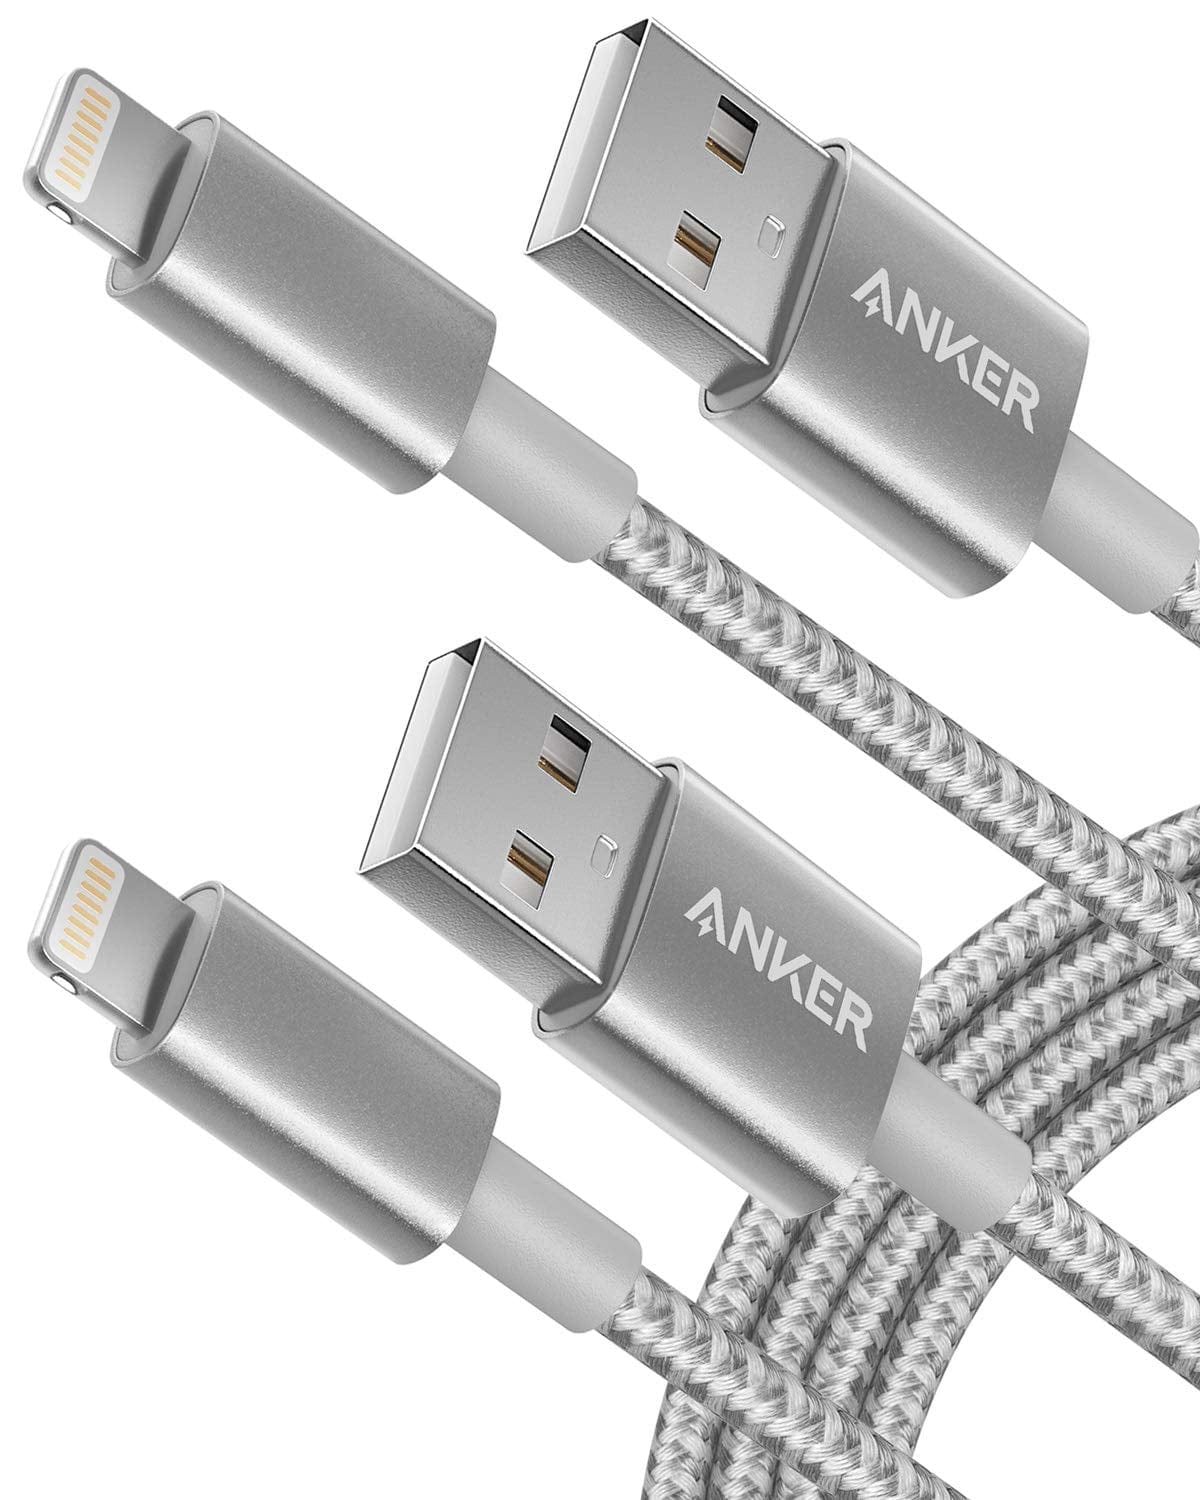  Anker 6ft Premium Double-Braided Nylon Lightning Cable